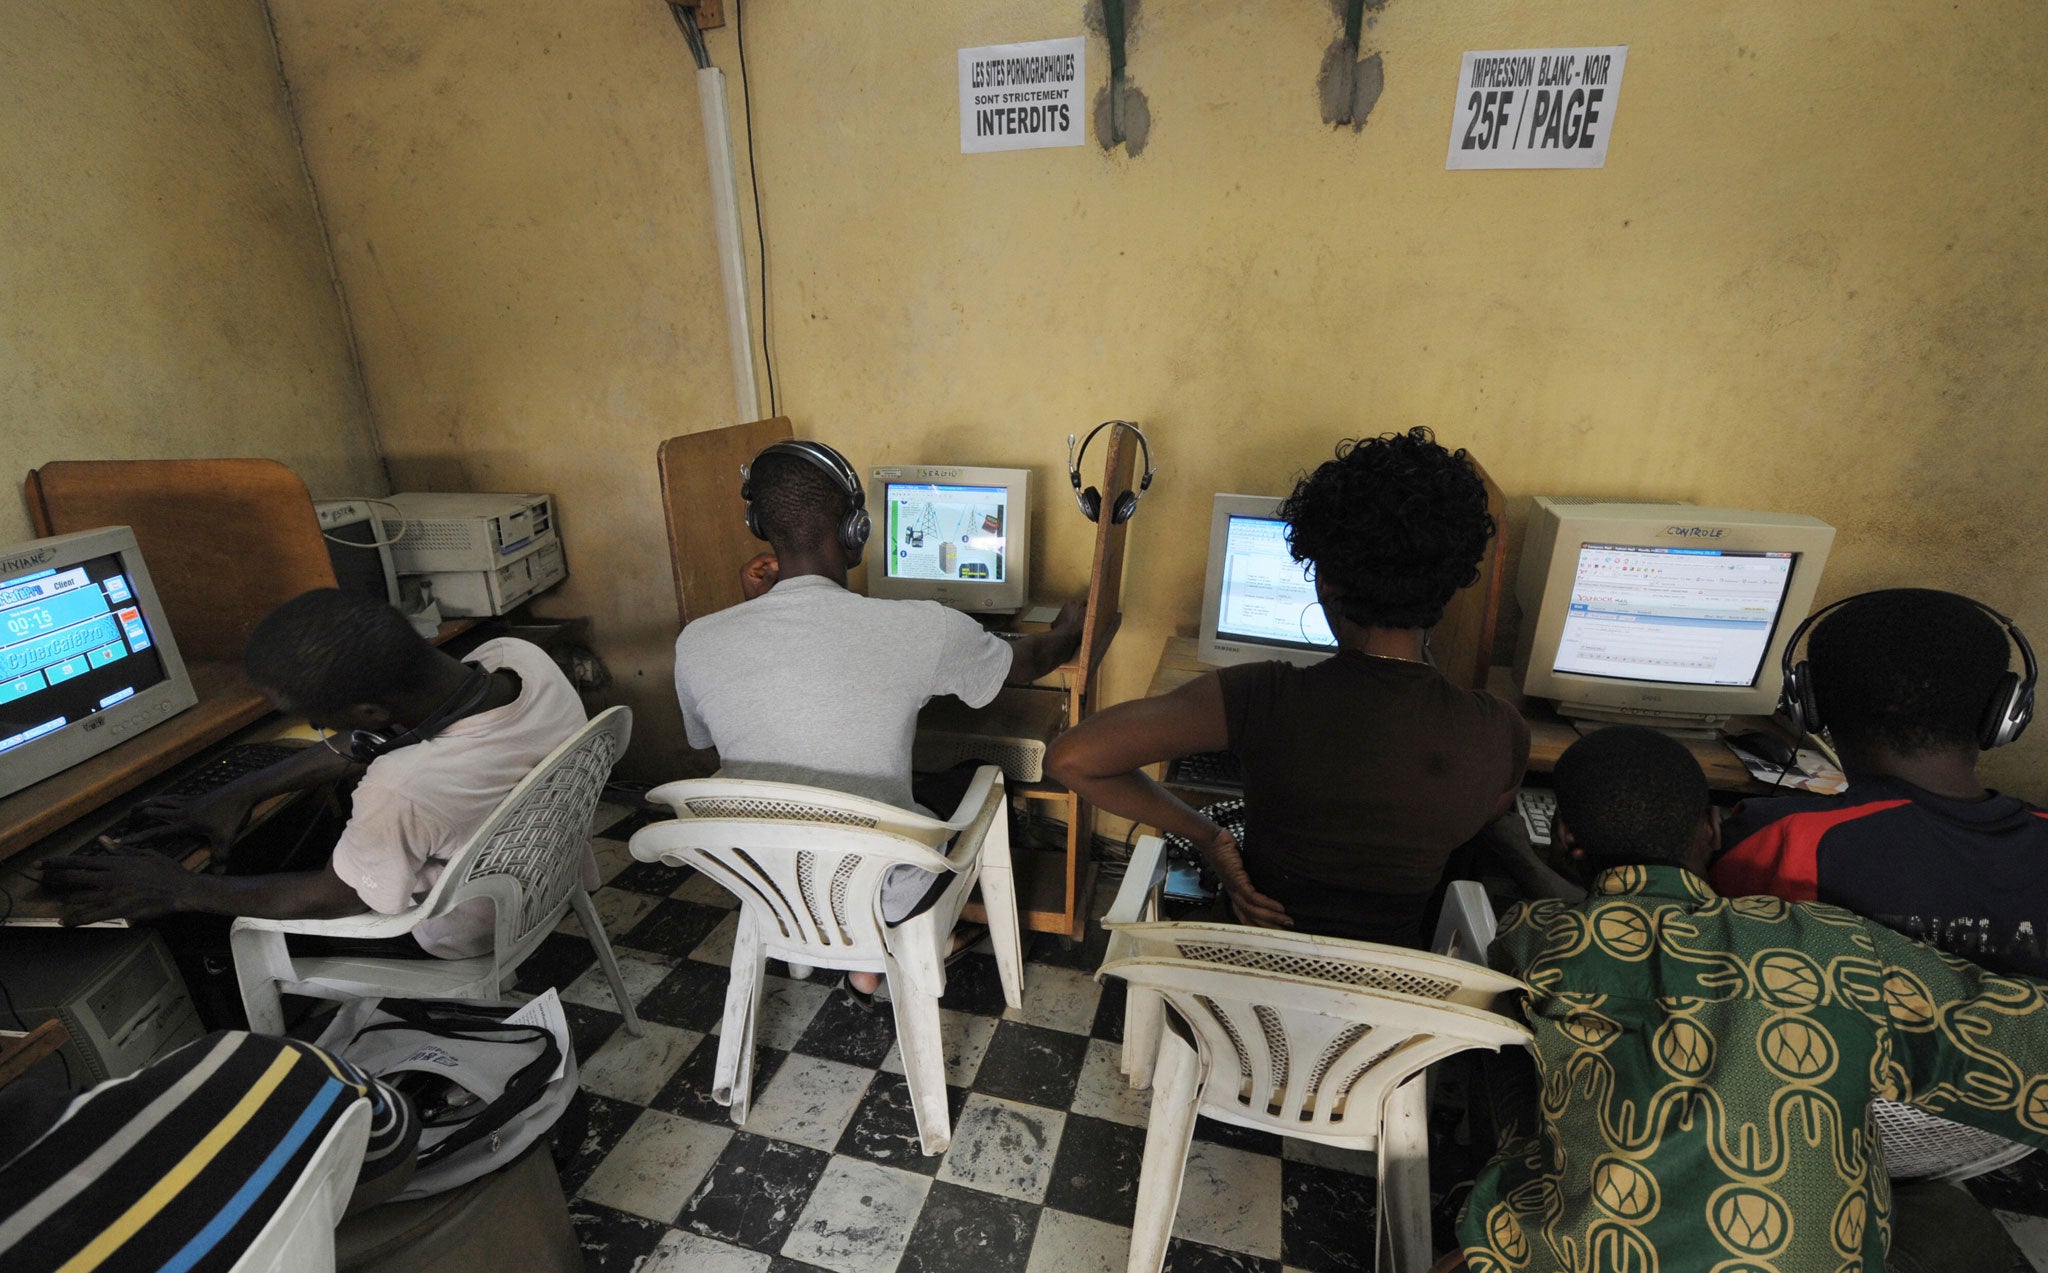 Internet cafe jobs in pretoria